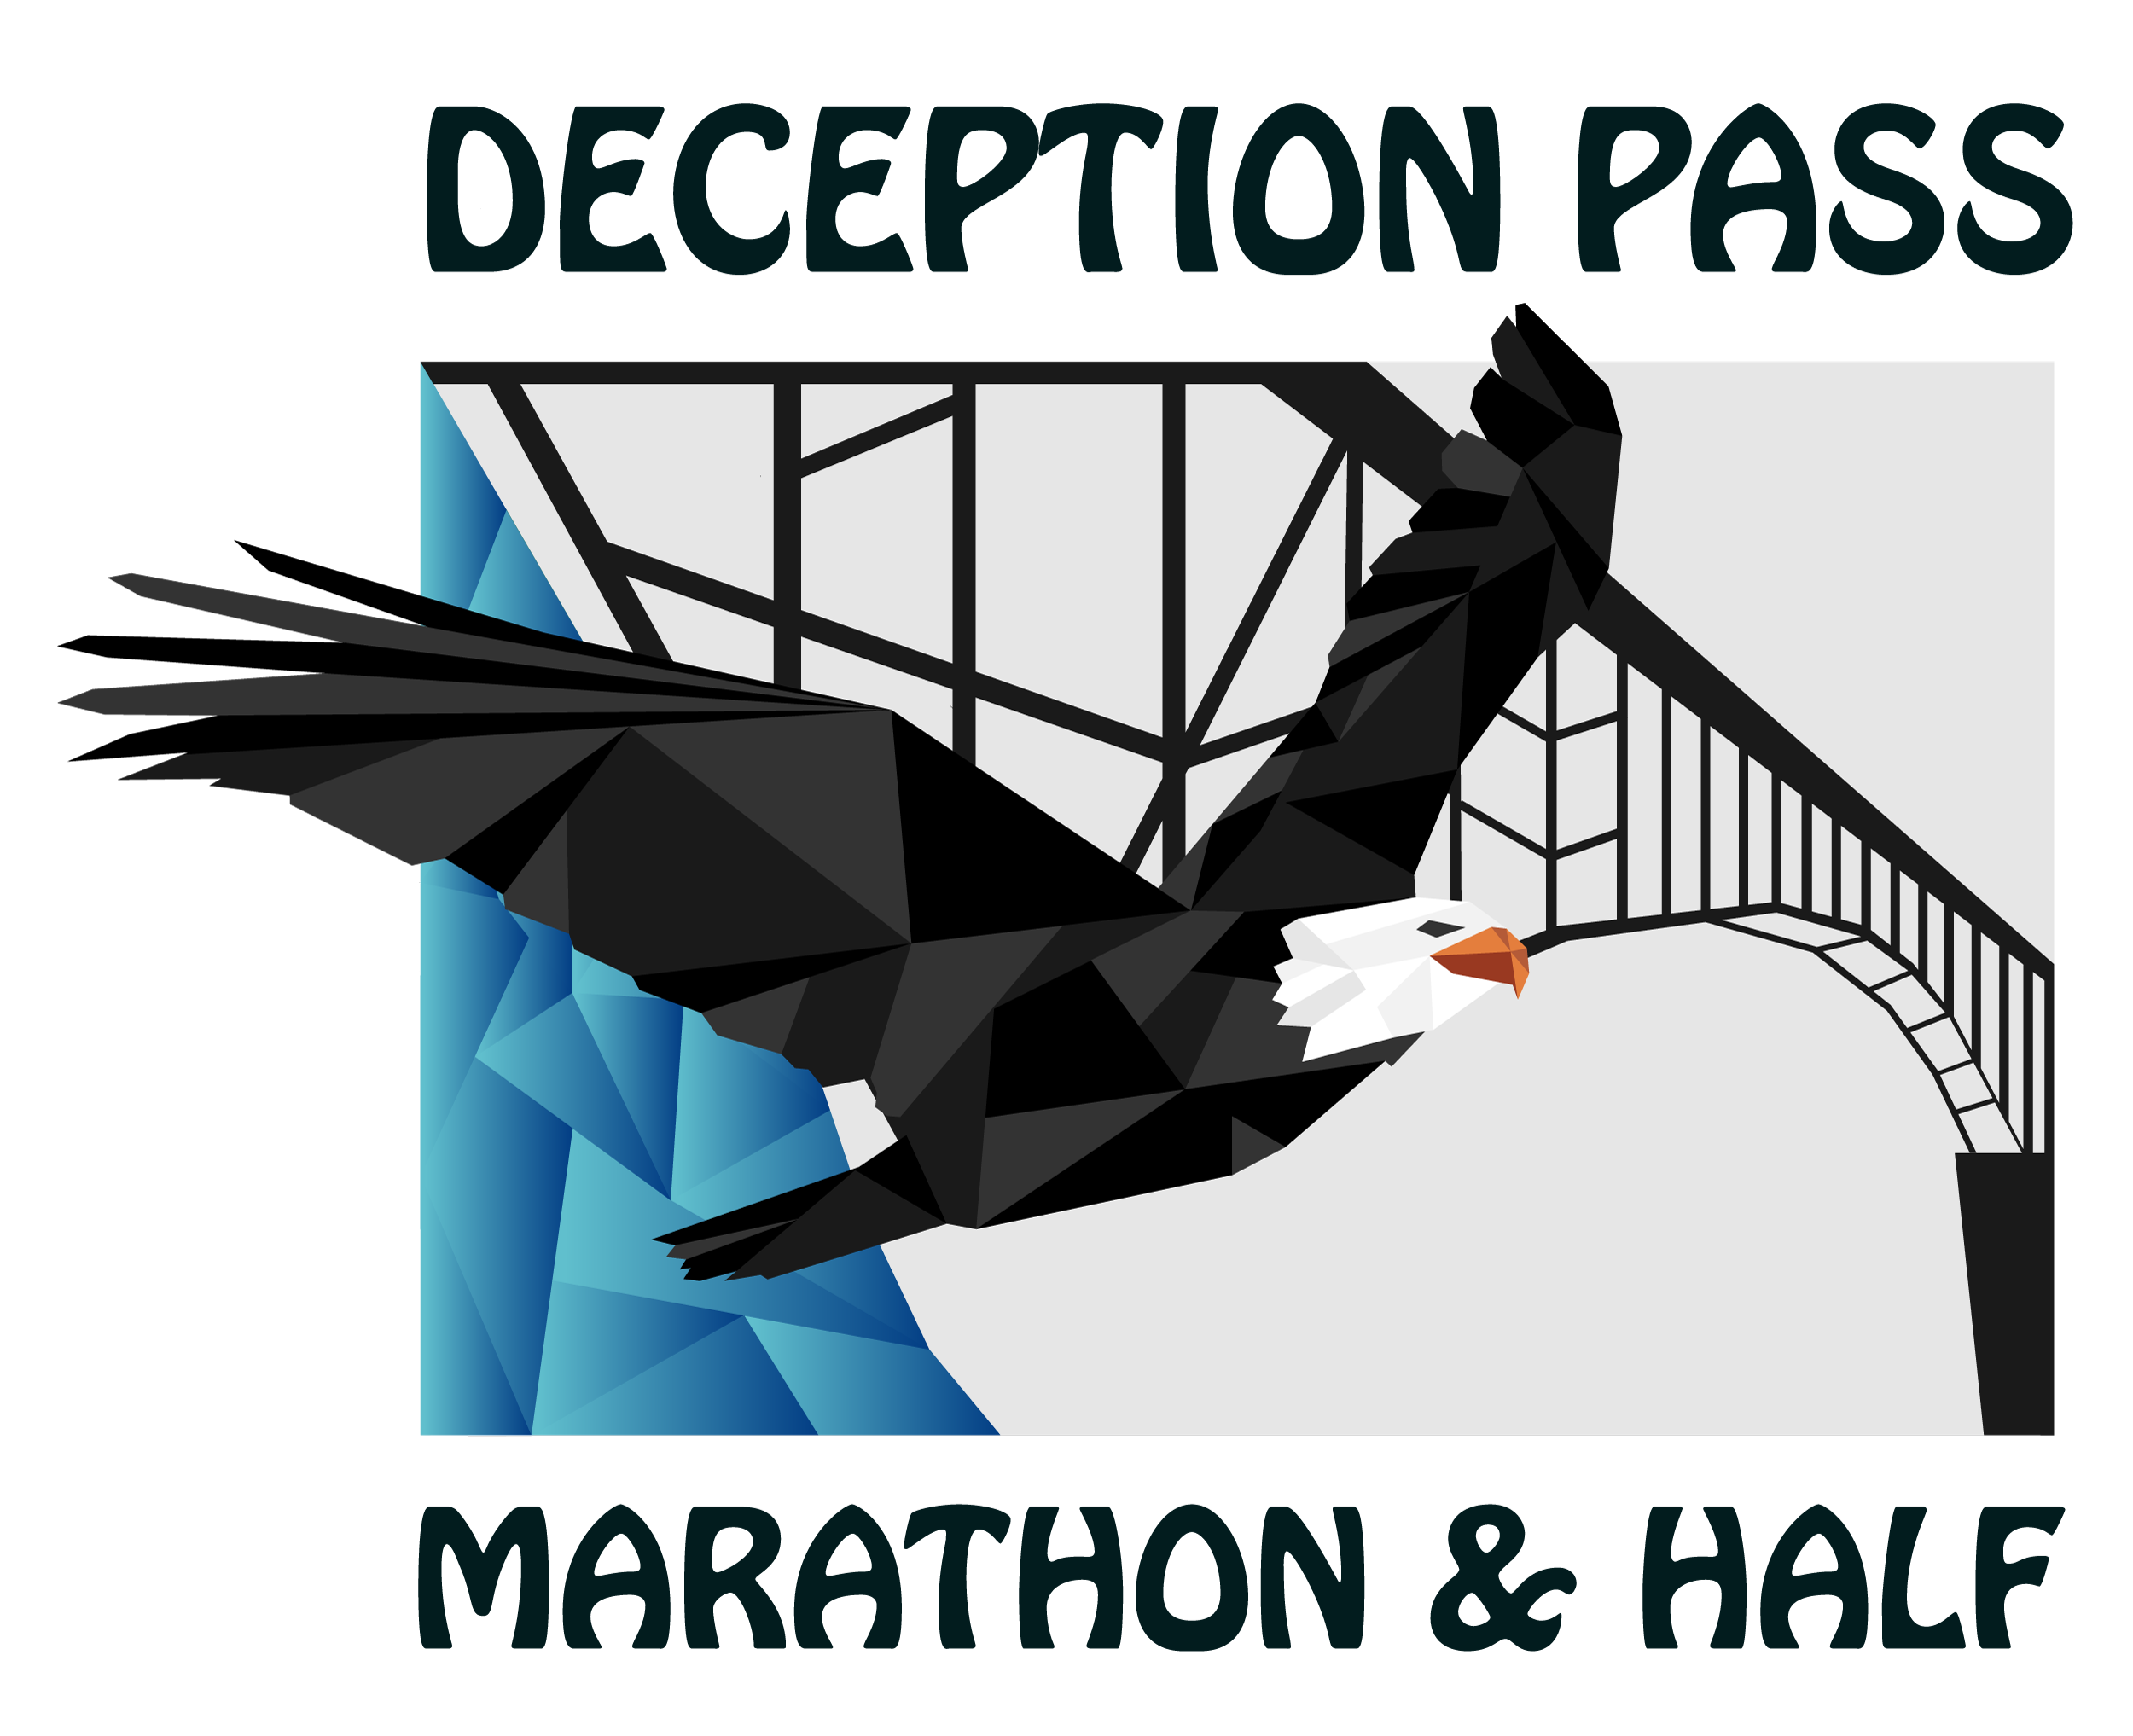 Deception Pass Marathon & Half logo on RaceRaves